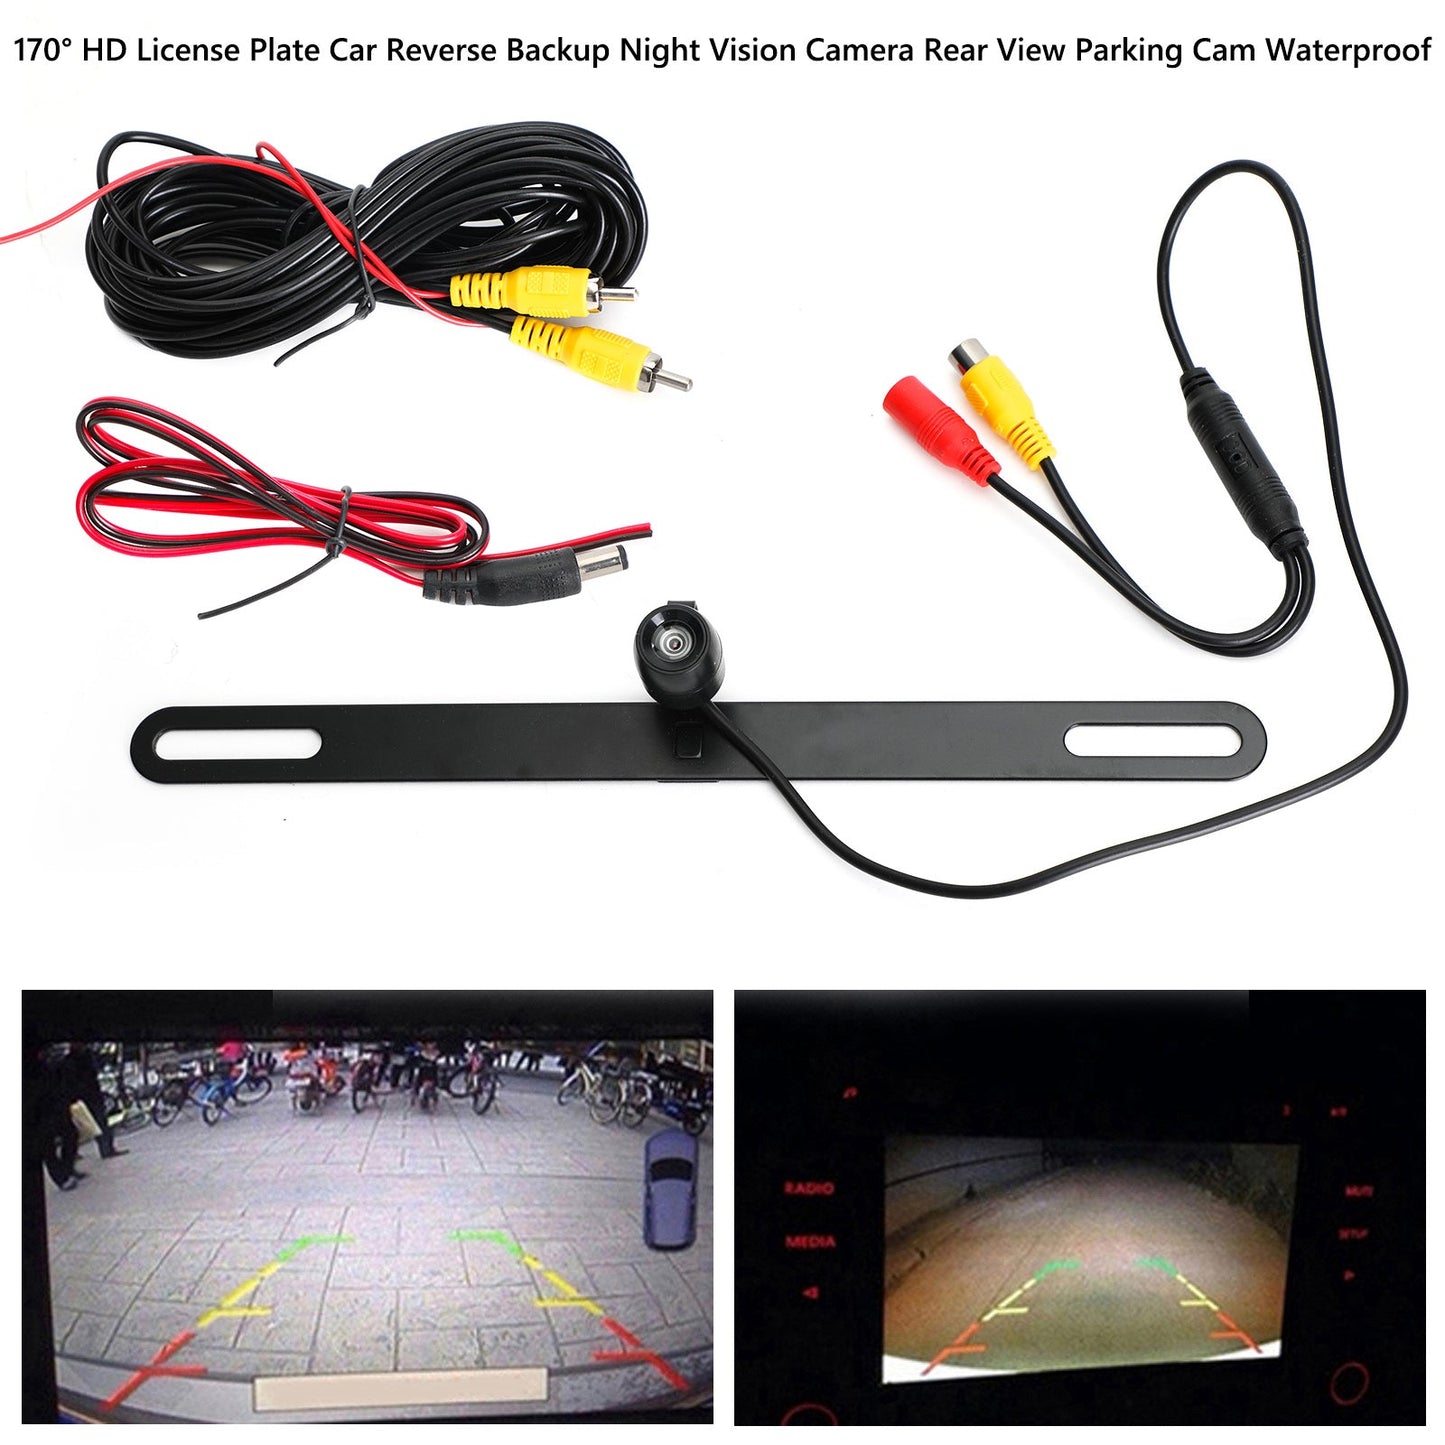 170°HD License Plate Car Rear View Reverse Backup Camera Night Vision Waterproof